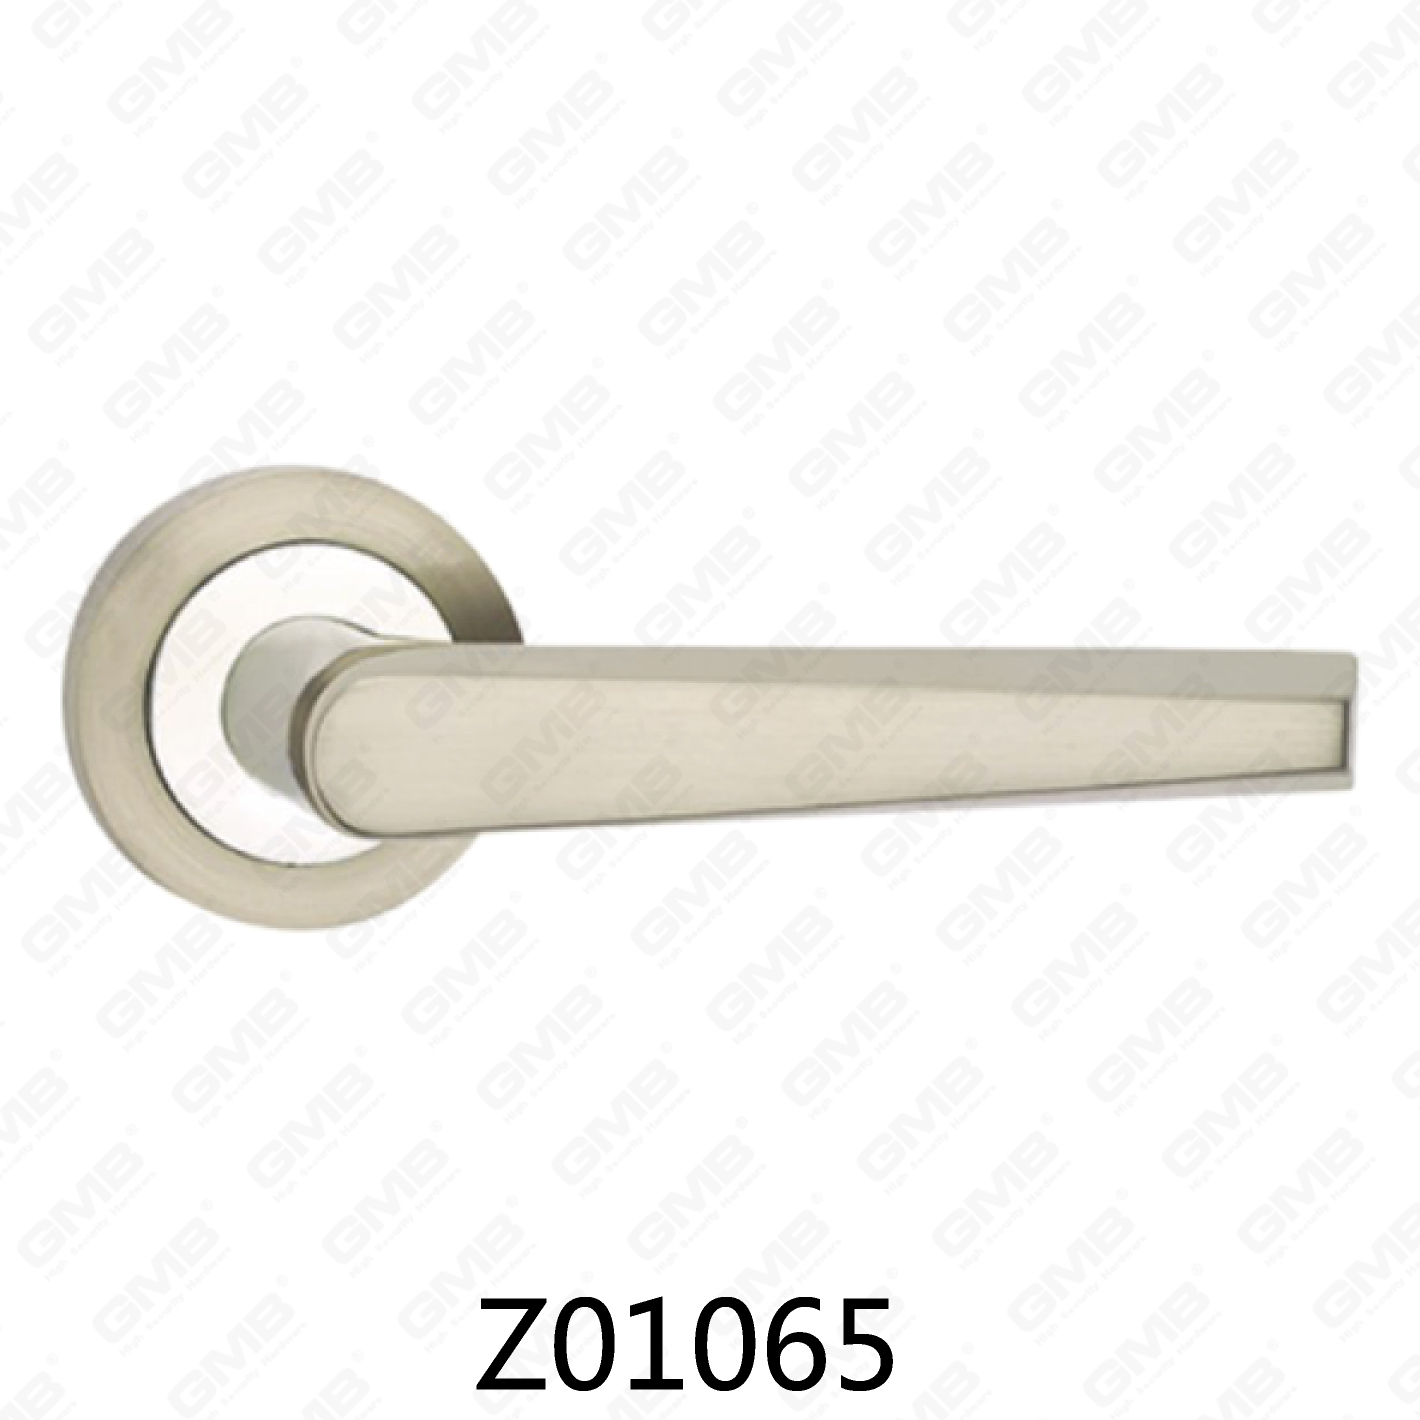 Rosetón de aluminio de aleación de zinc Zamak Manija de puerta con rosetón redondo (Z01065)